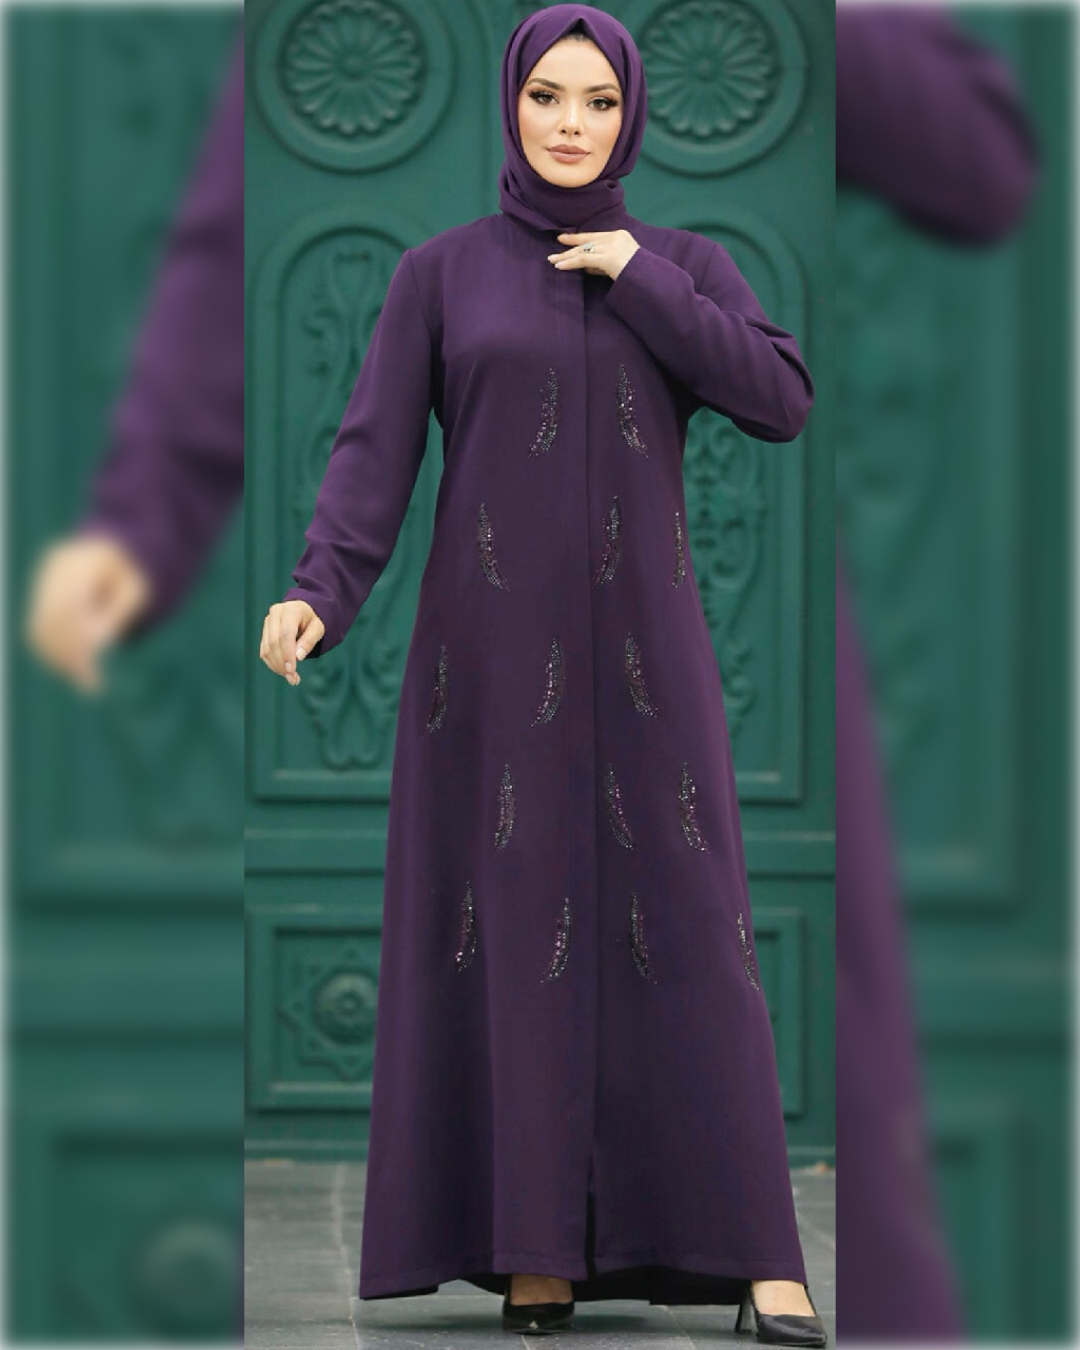 Fatimah Chic Abaya Dress for Summer in Plum Shade   عباءة فاطمة الصيفية  باللون العنابّي الجميل و تفاصيل أنيقة